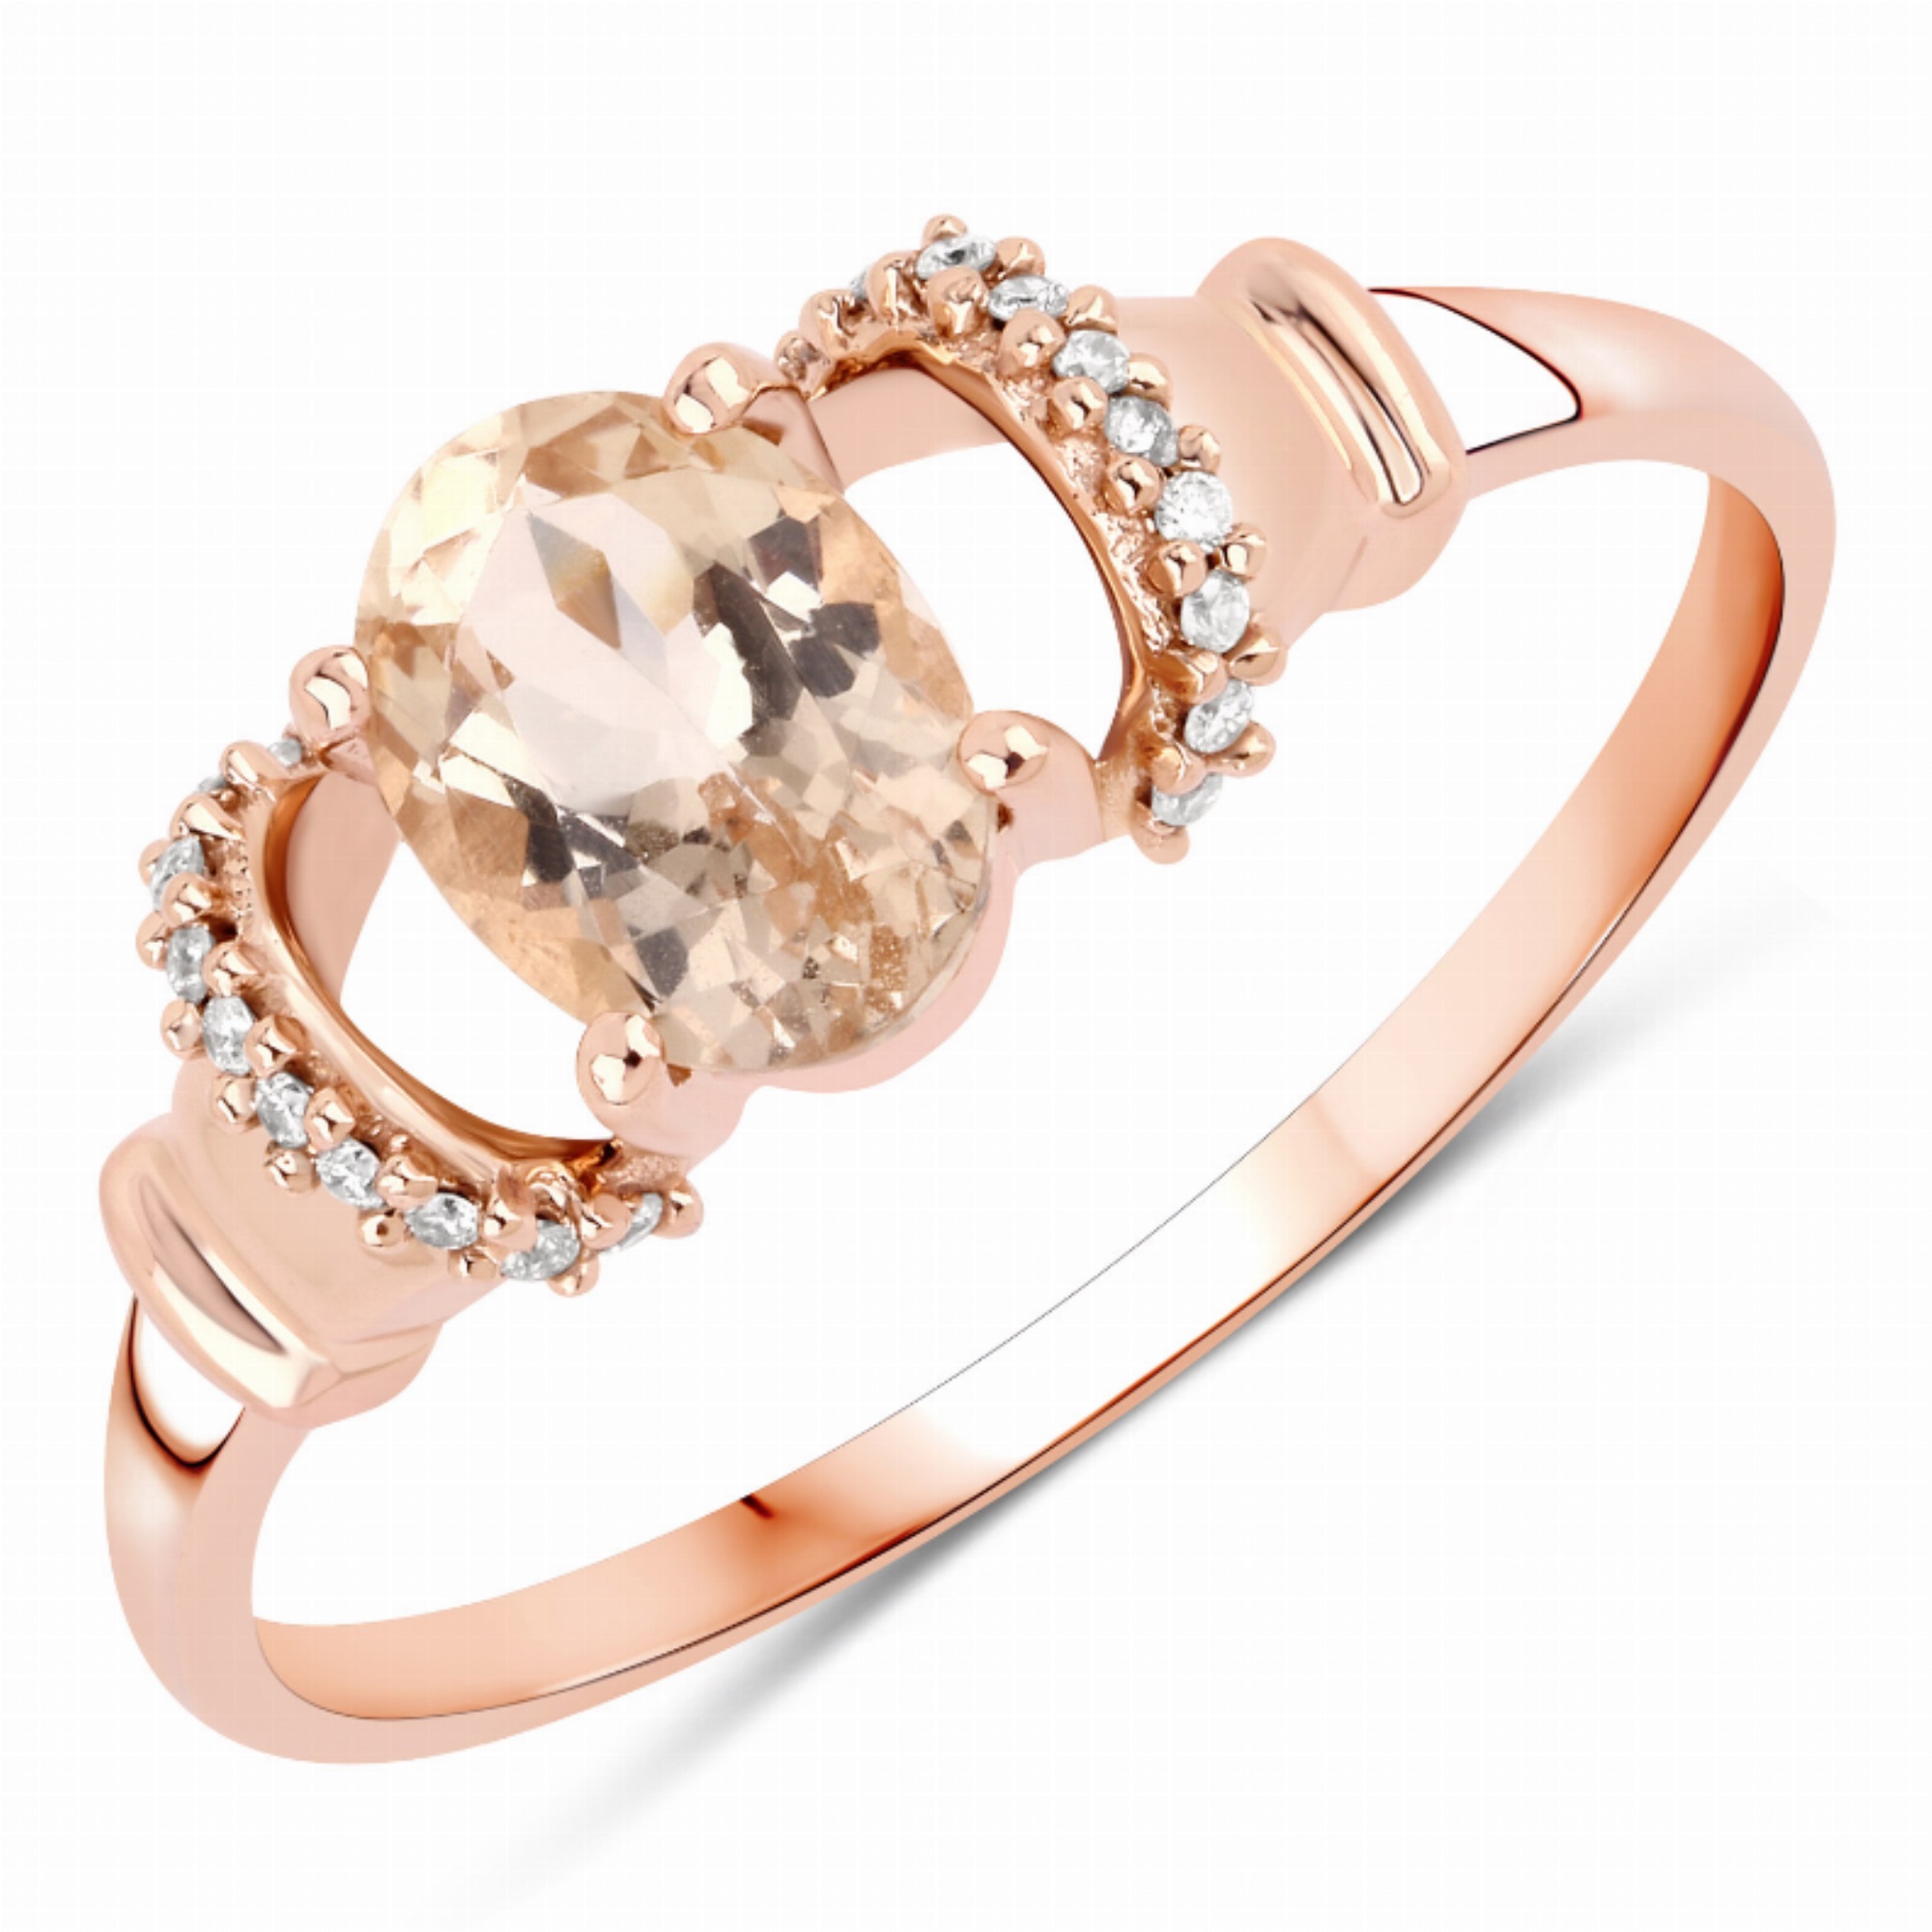 Quintessence Jewelry 0.76 Carat Genuine Morganite and White Diamond 14K Rose Gold Ring